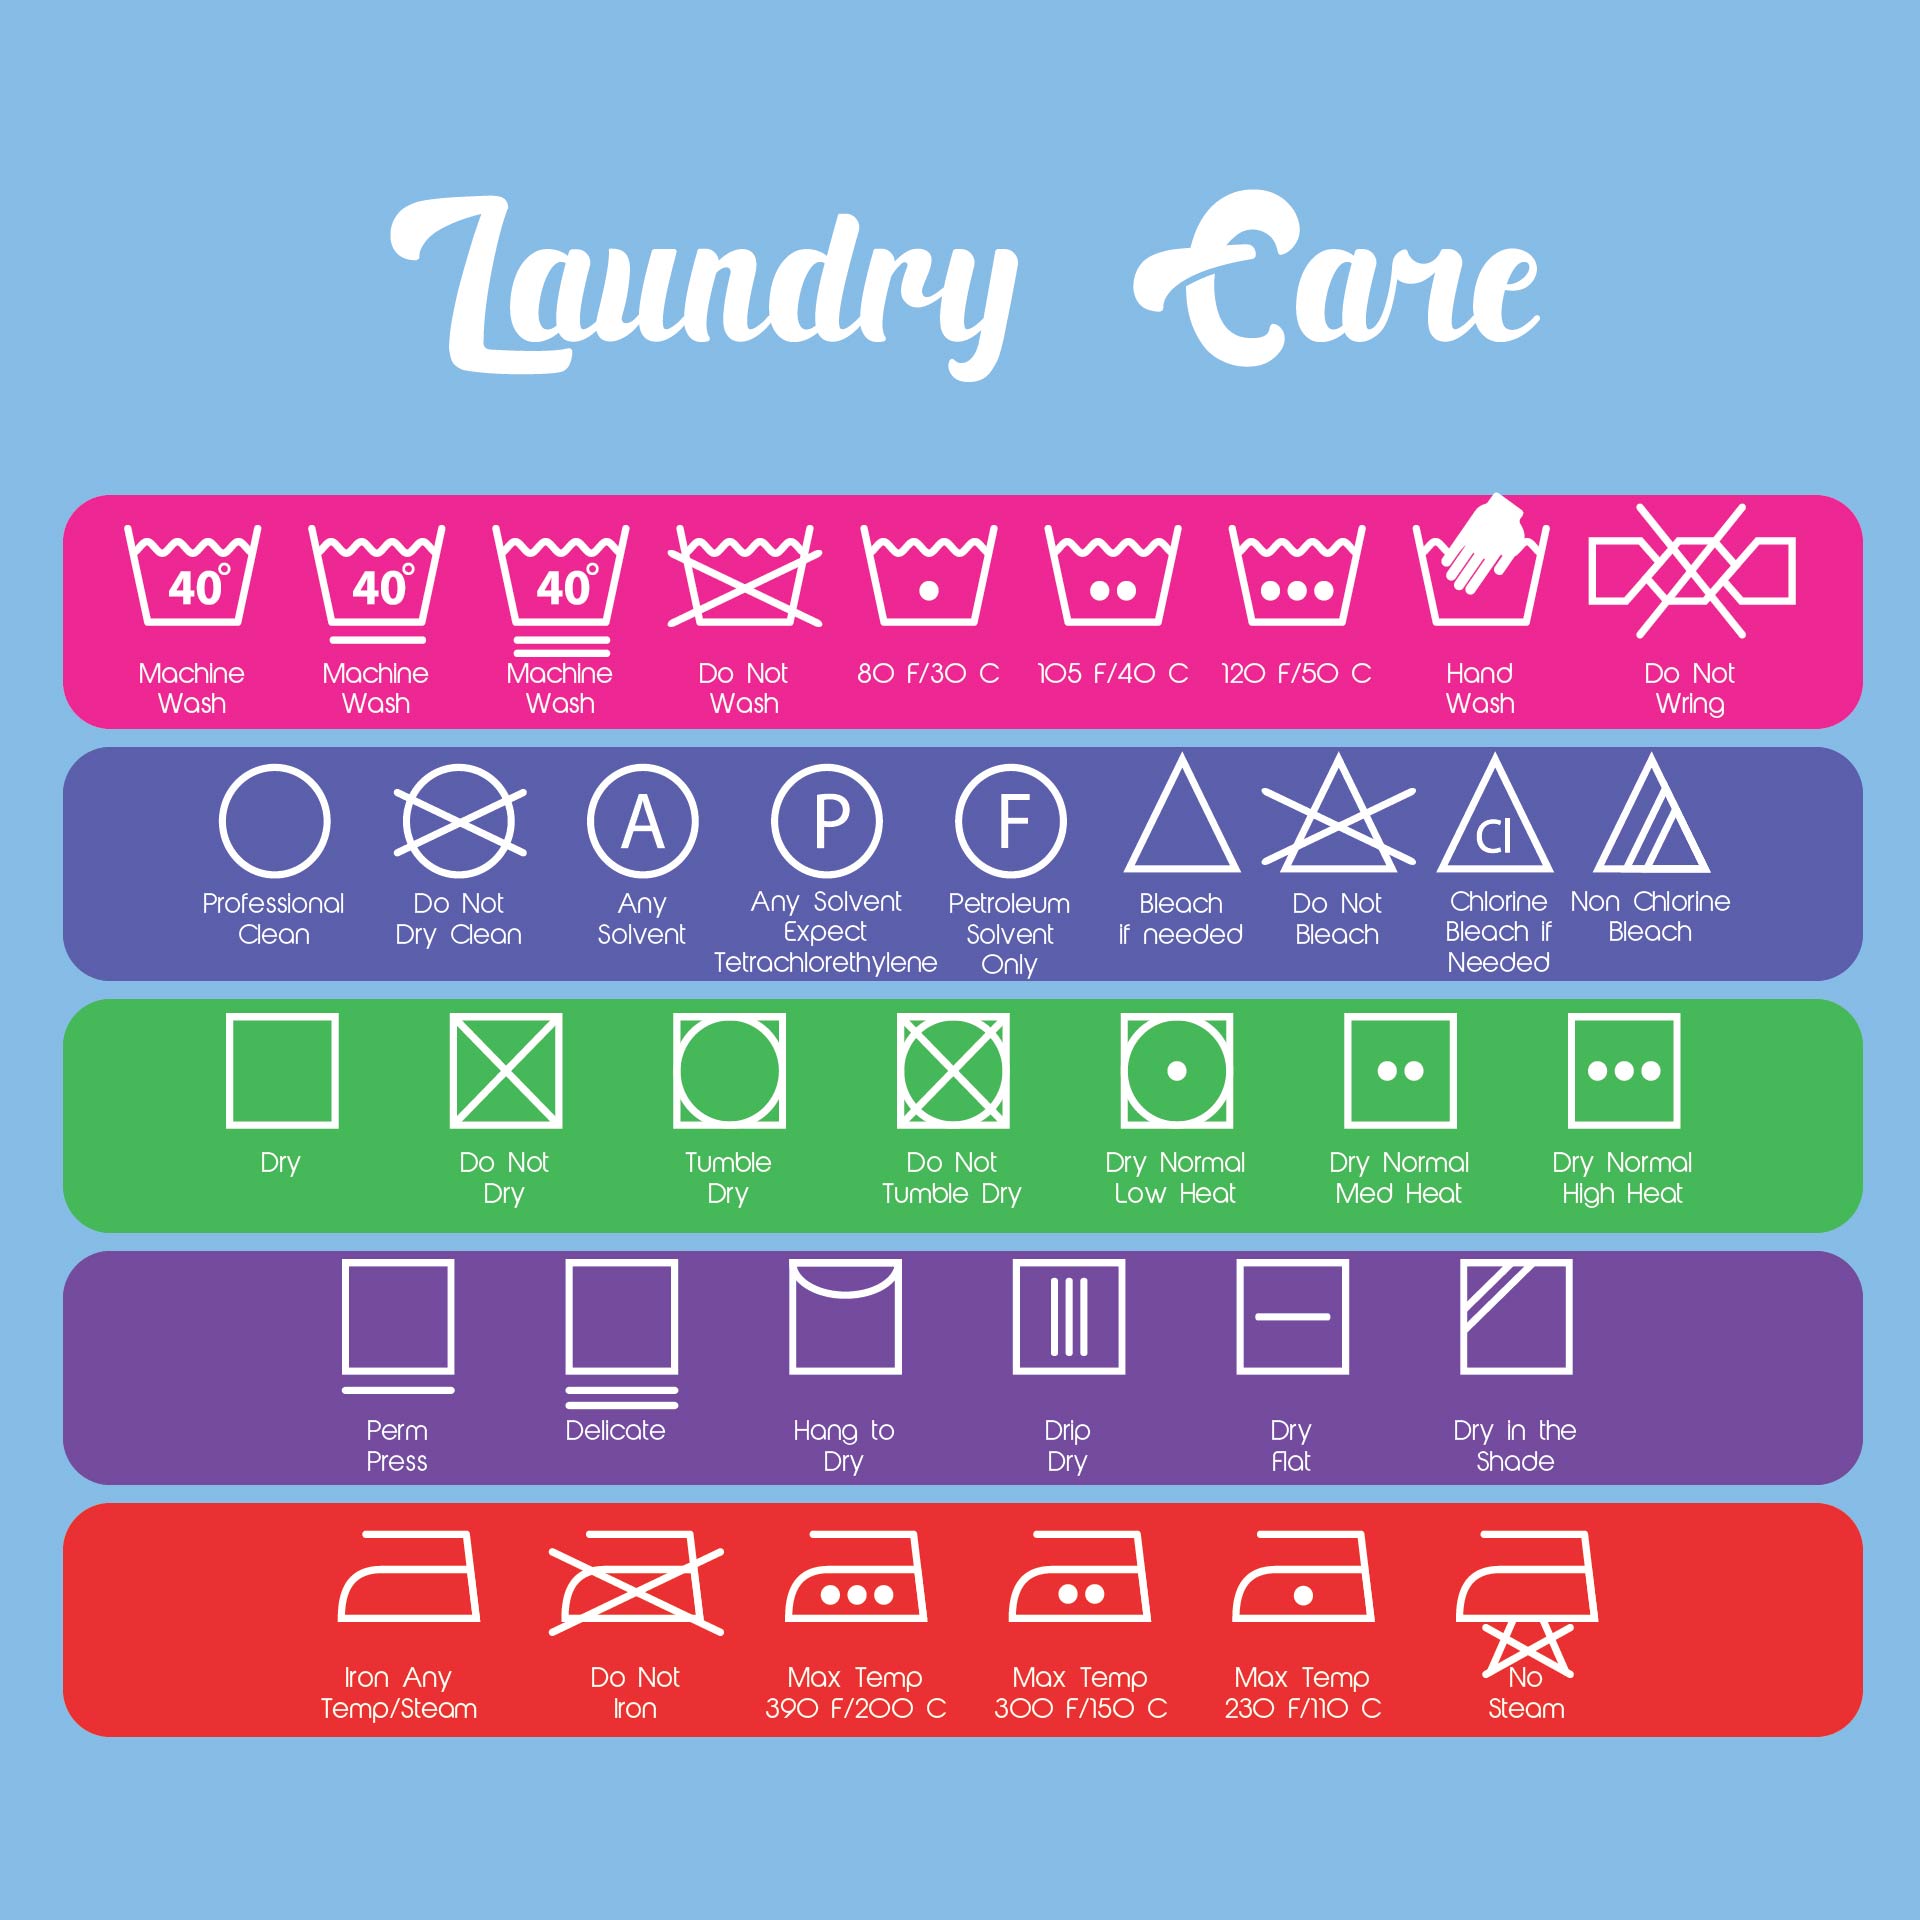 Laundry Symbols Chart